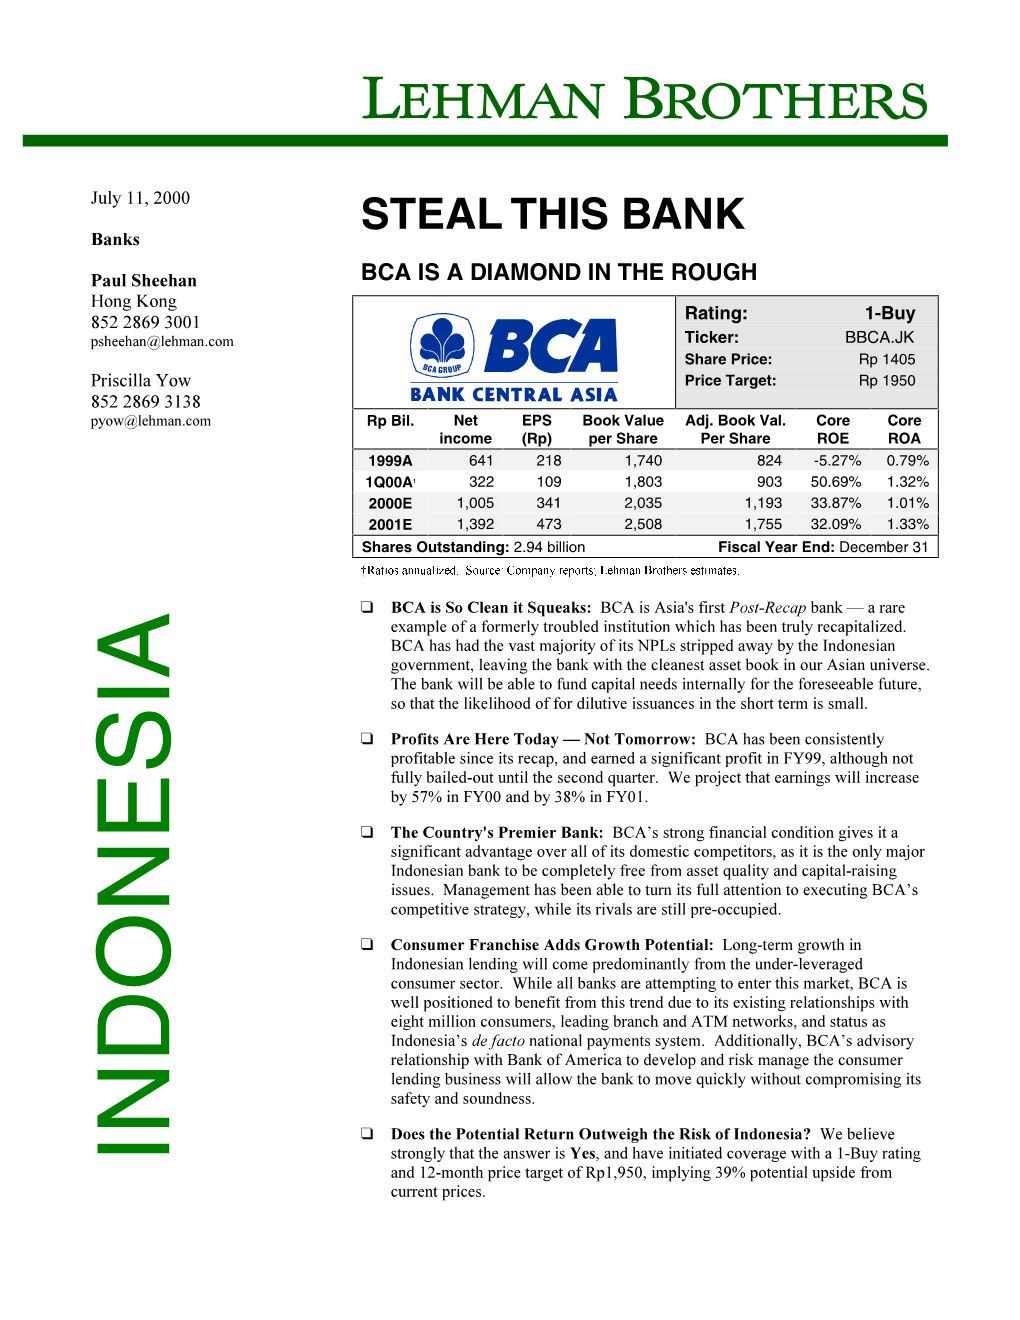 BCA: Steal This Bank